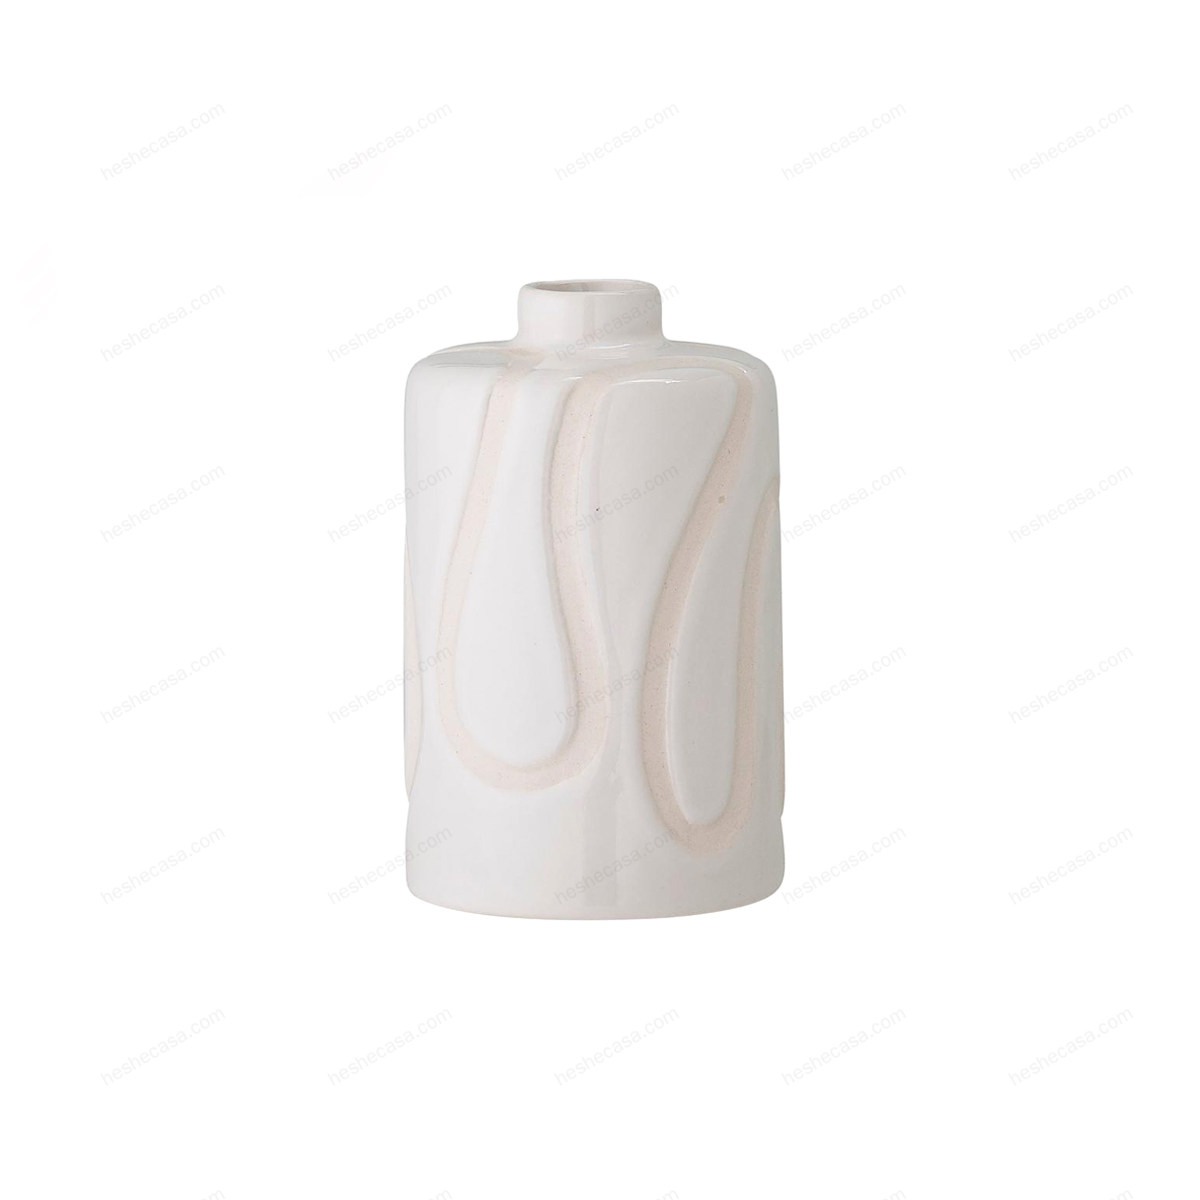 Elice Vase, White, Stoneware花瓶